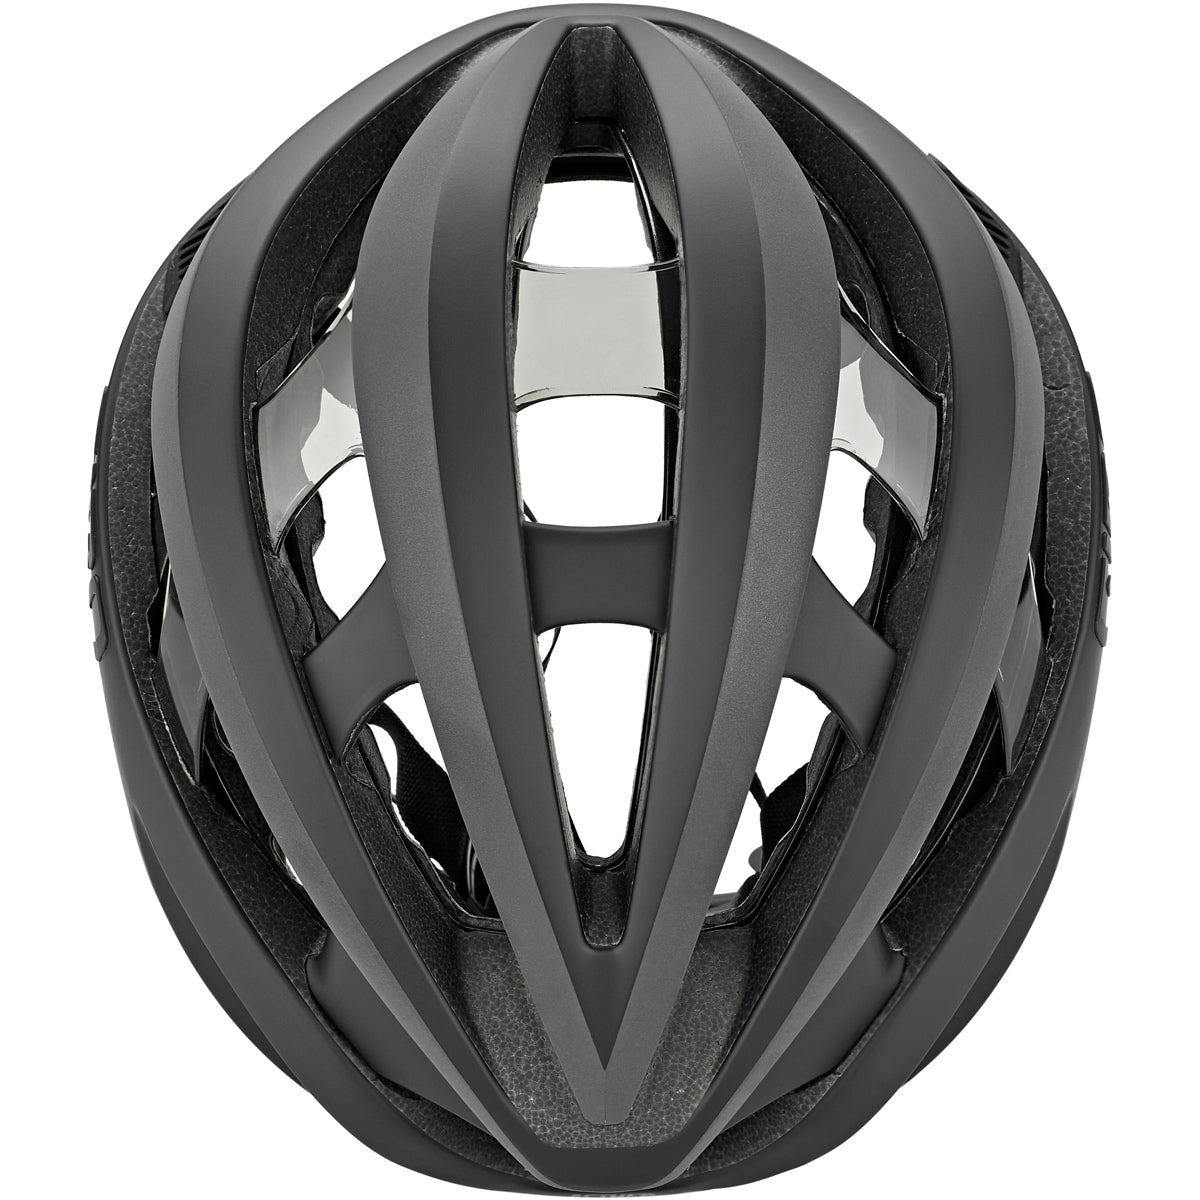 Giro Aether Spherical Mips helmet - Black | All4cycling